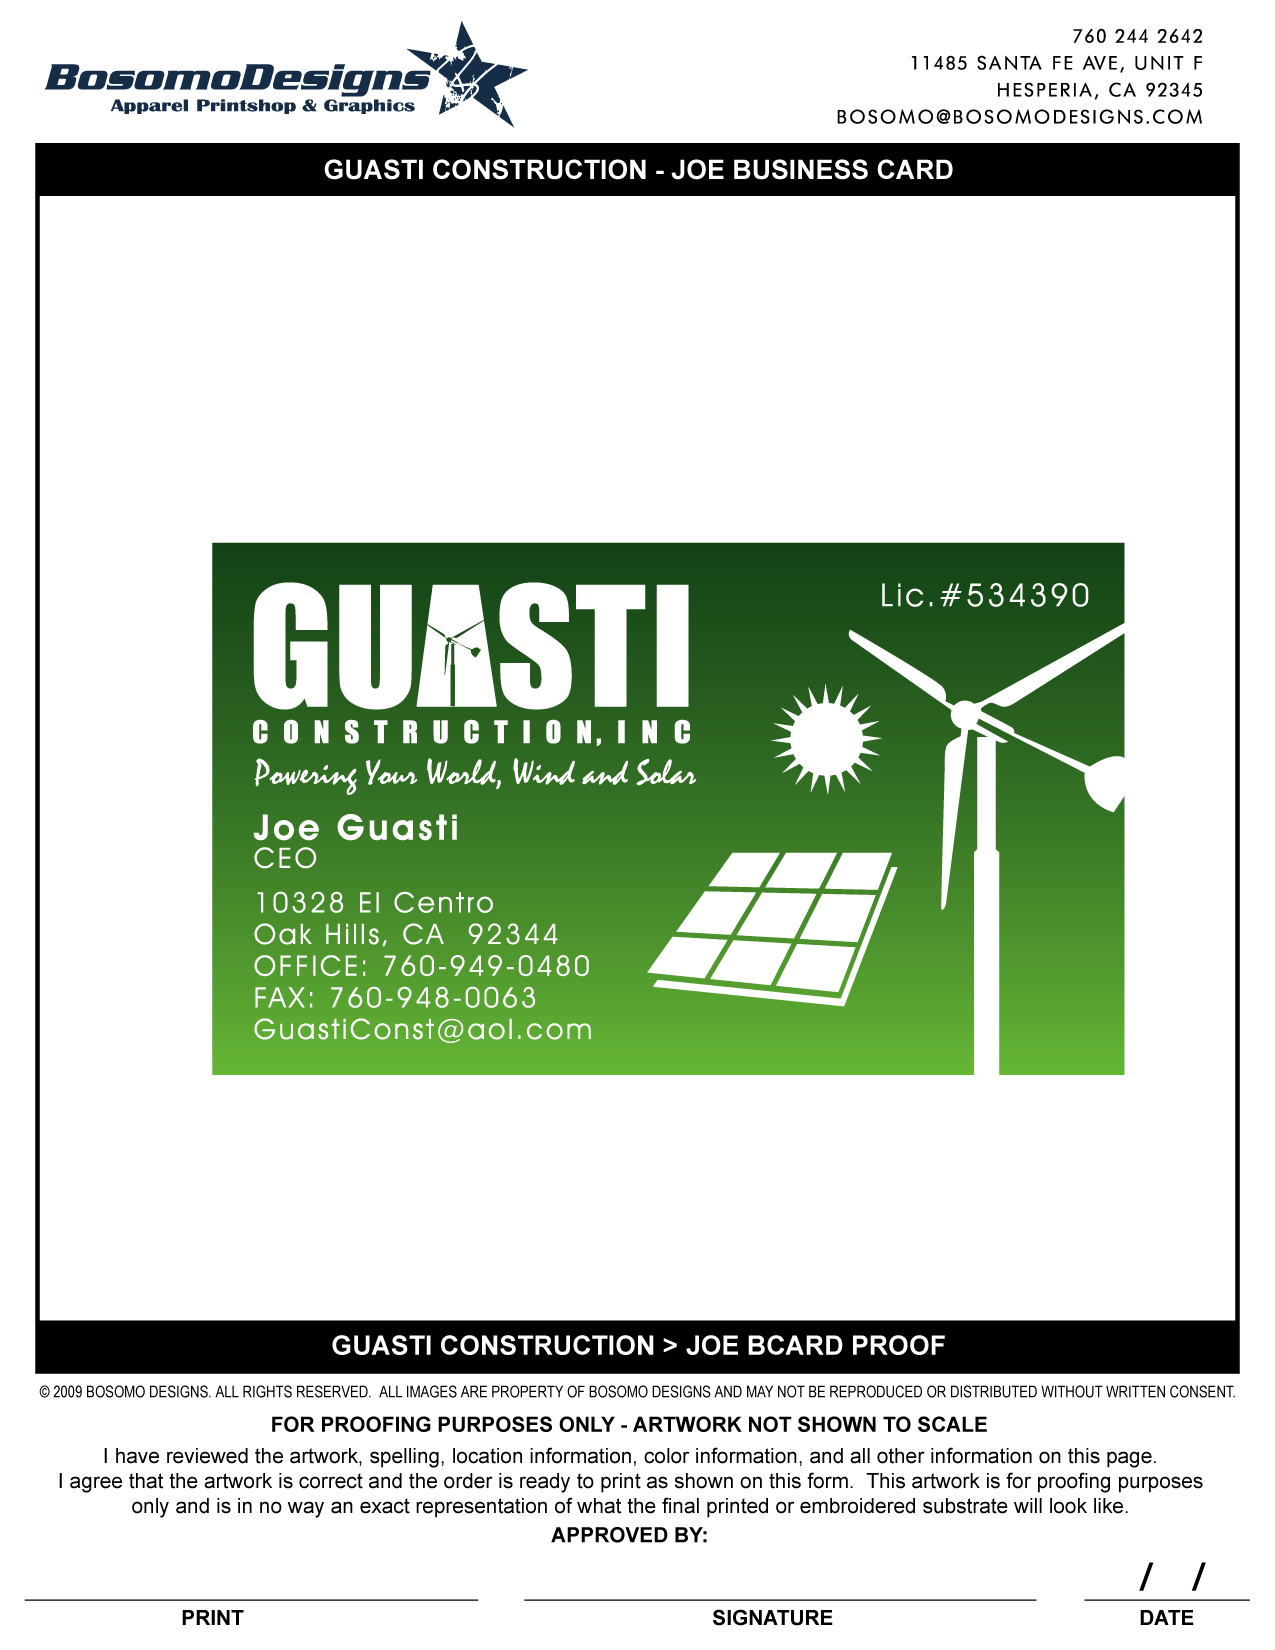 Guasti Construction, Inc. Logo